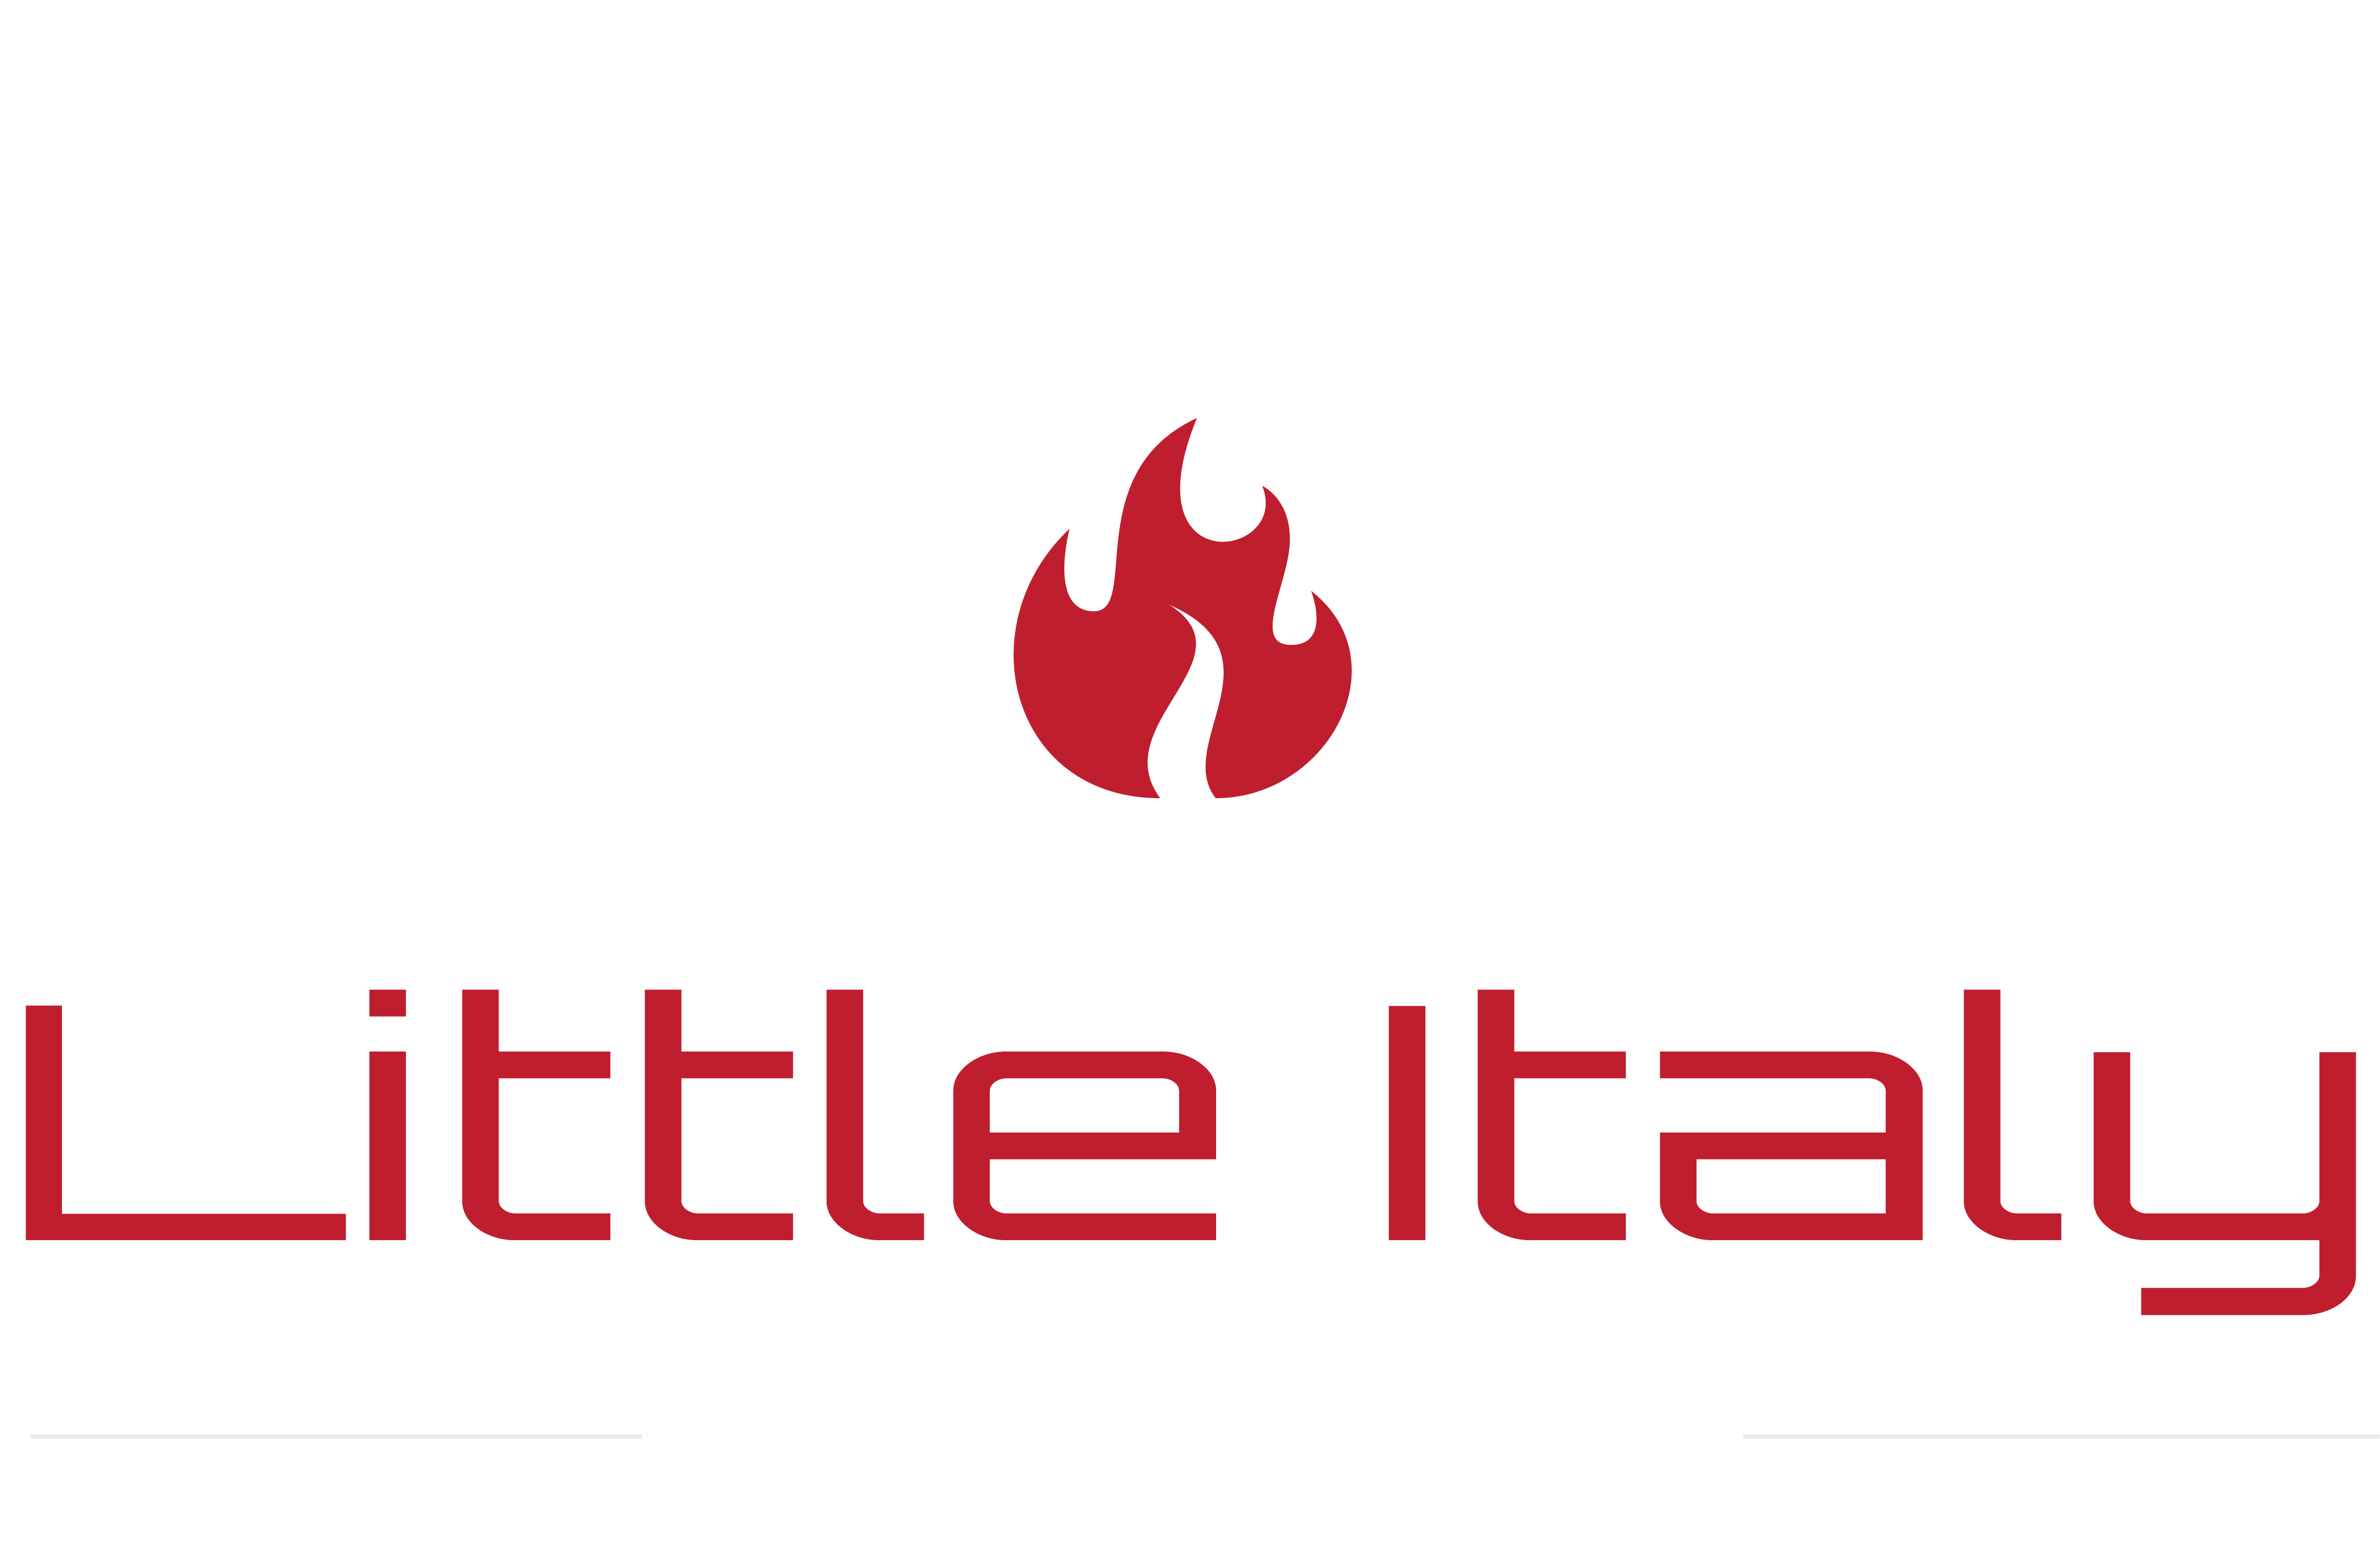 Logo Little Italy Forni